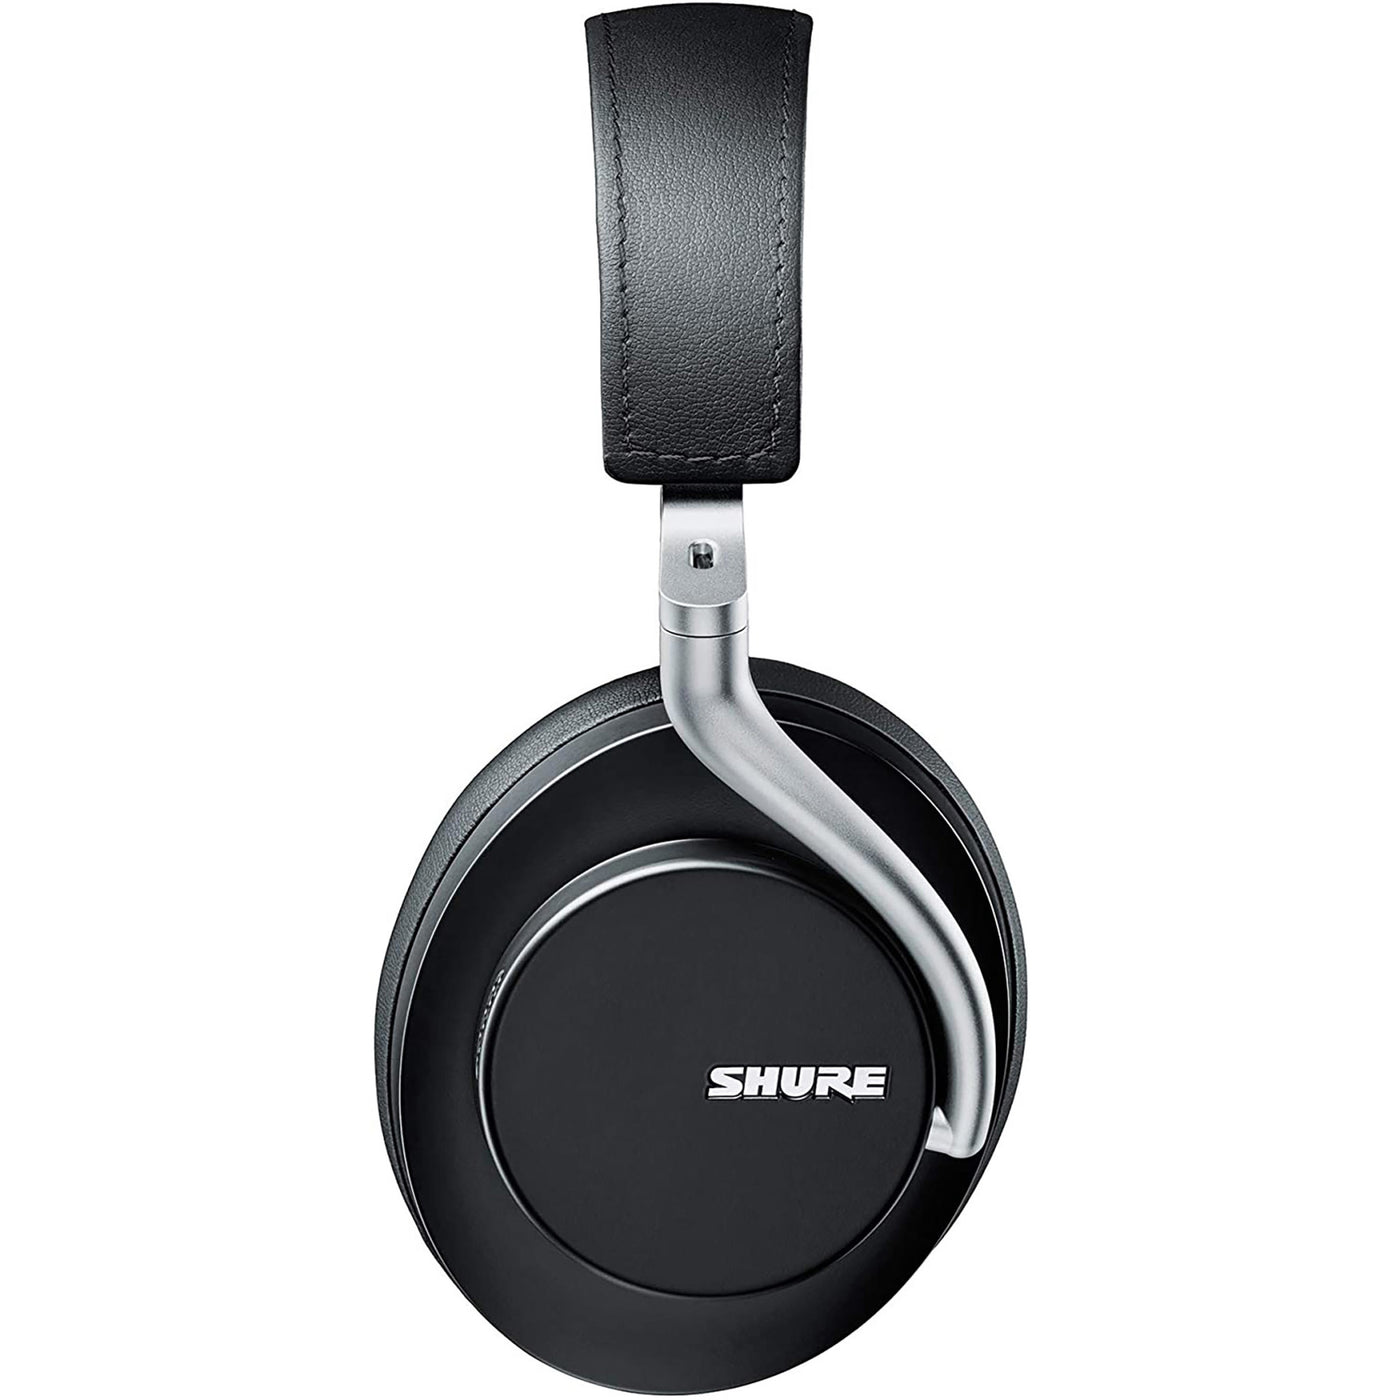 Shure AONIC 50 Premium Wireless Bluetooth Headphone (Black)